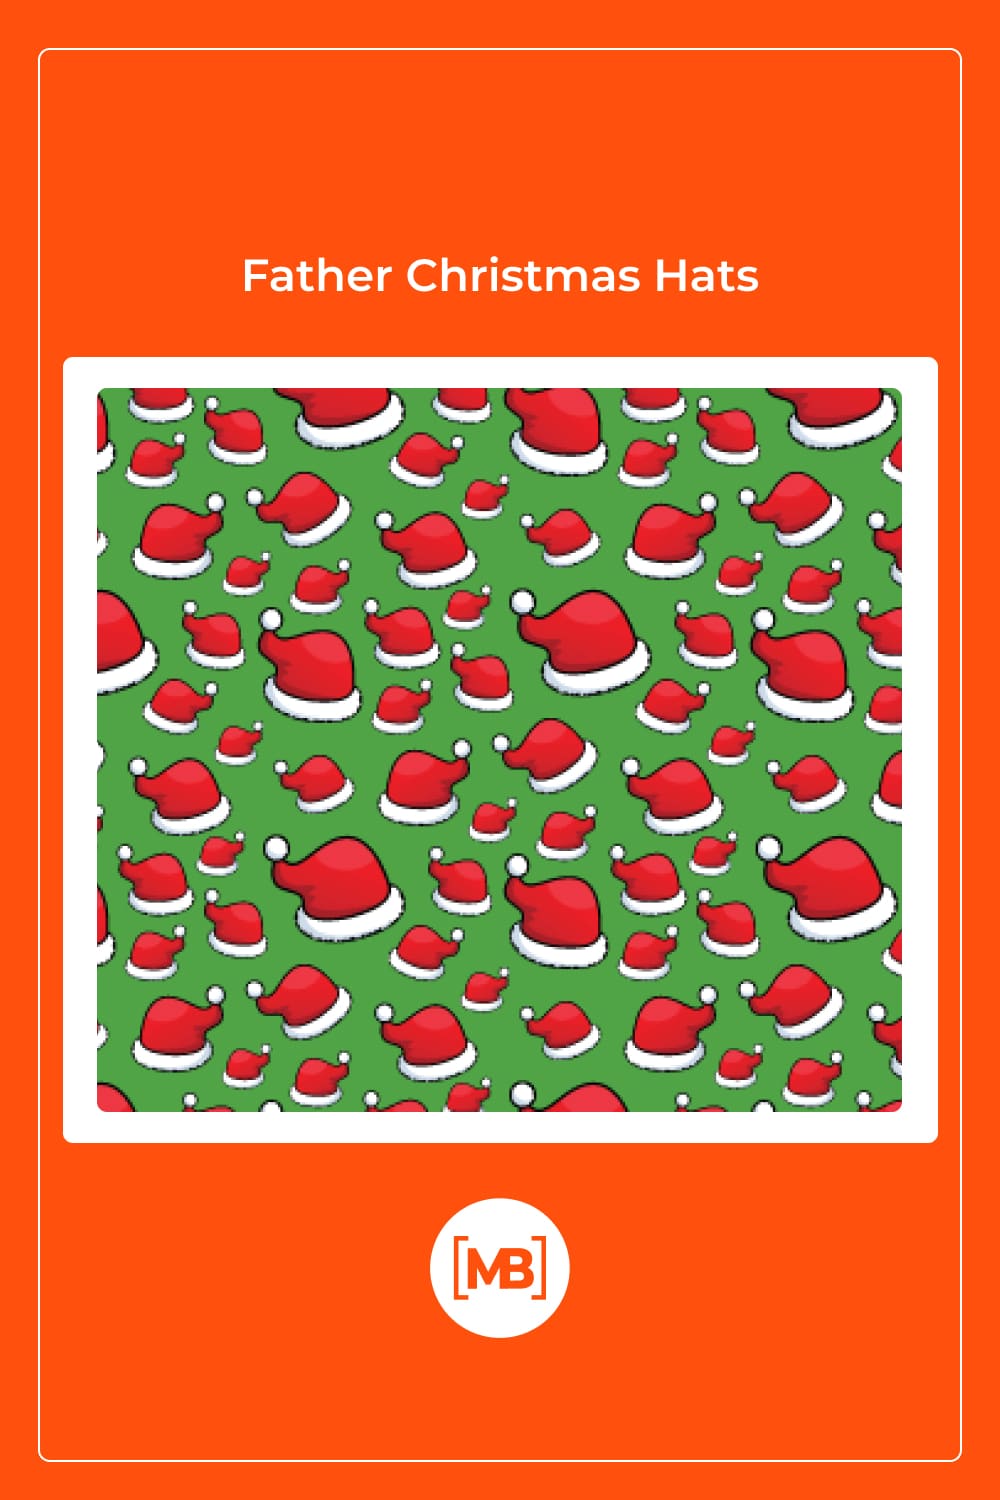 Santa's hats.